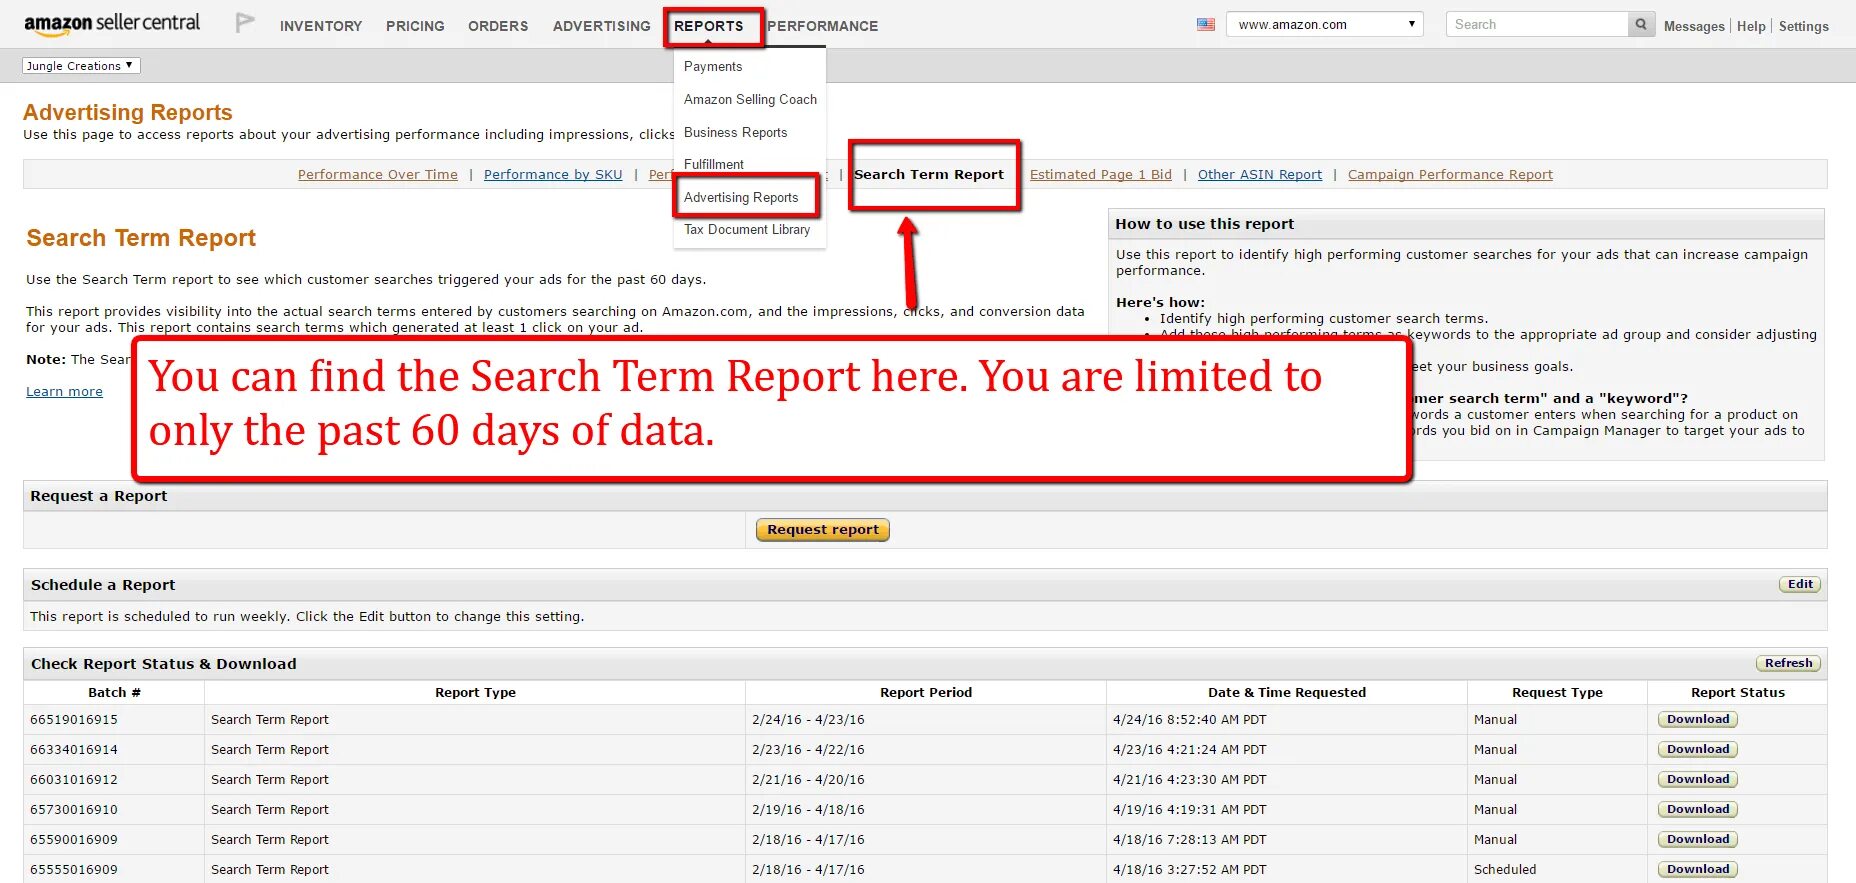 Amazon seller account. Search Amazon. Seller Central Amazon .com. Терм репорт шаблоны. Reported search